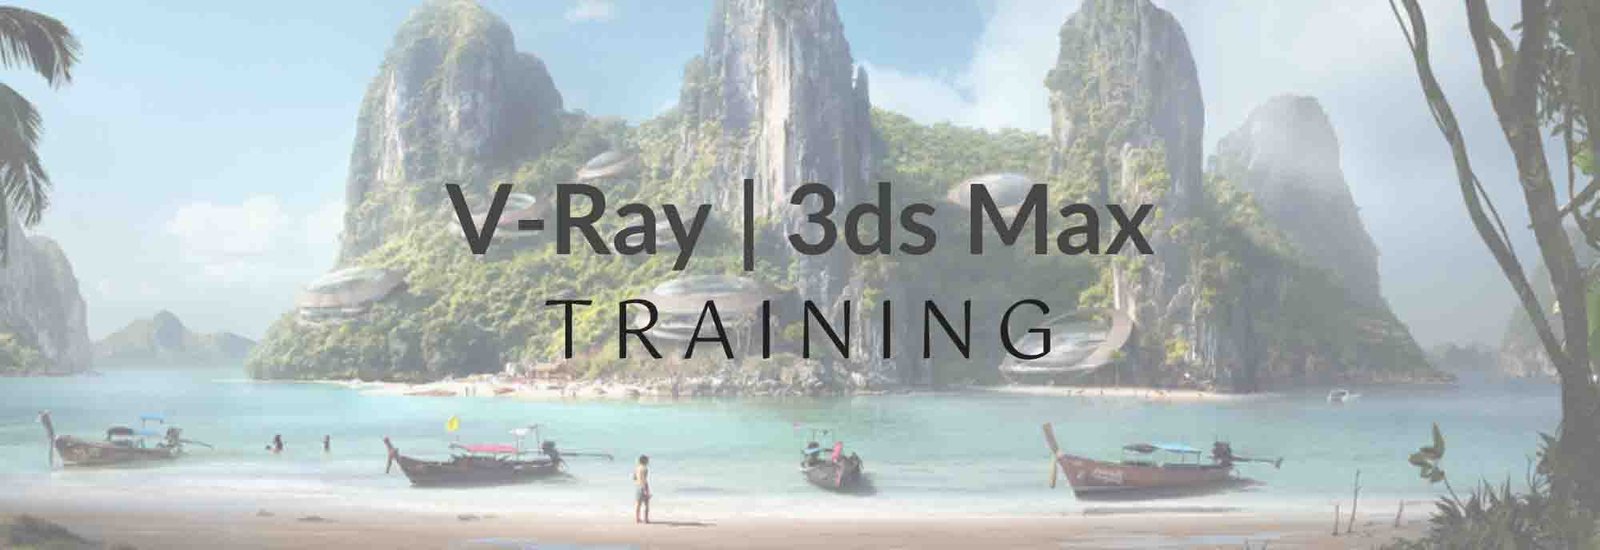 V-Ray | 3ds Max training